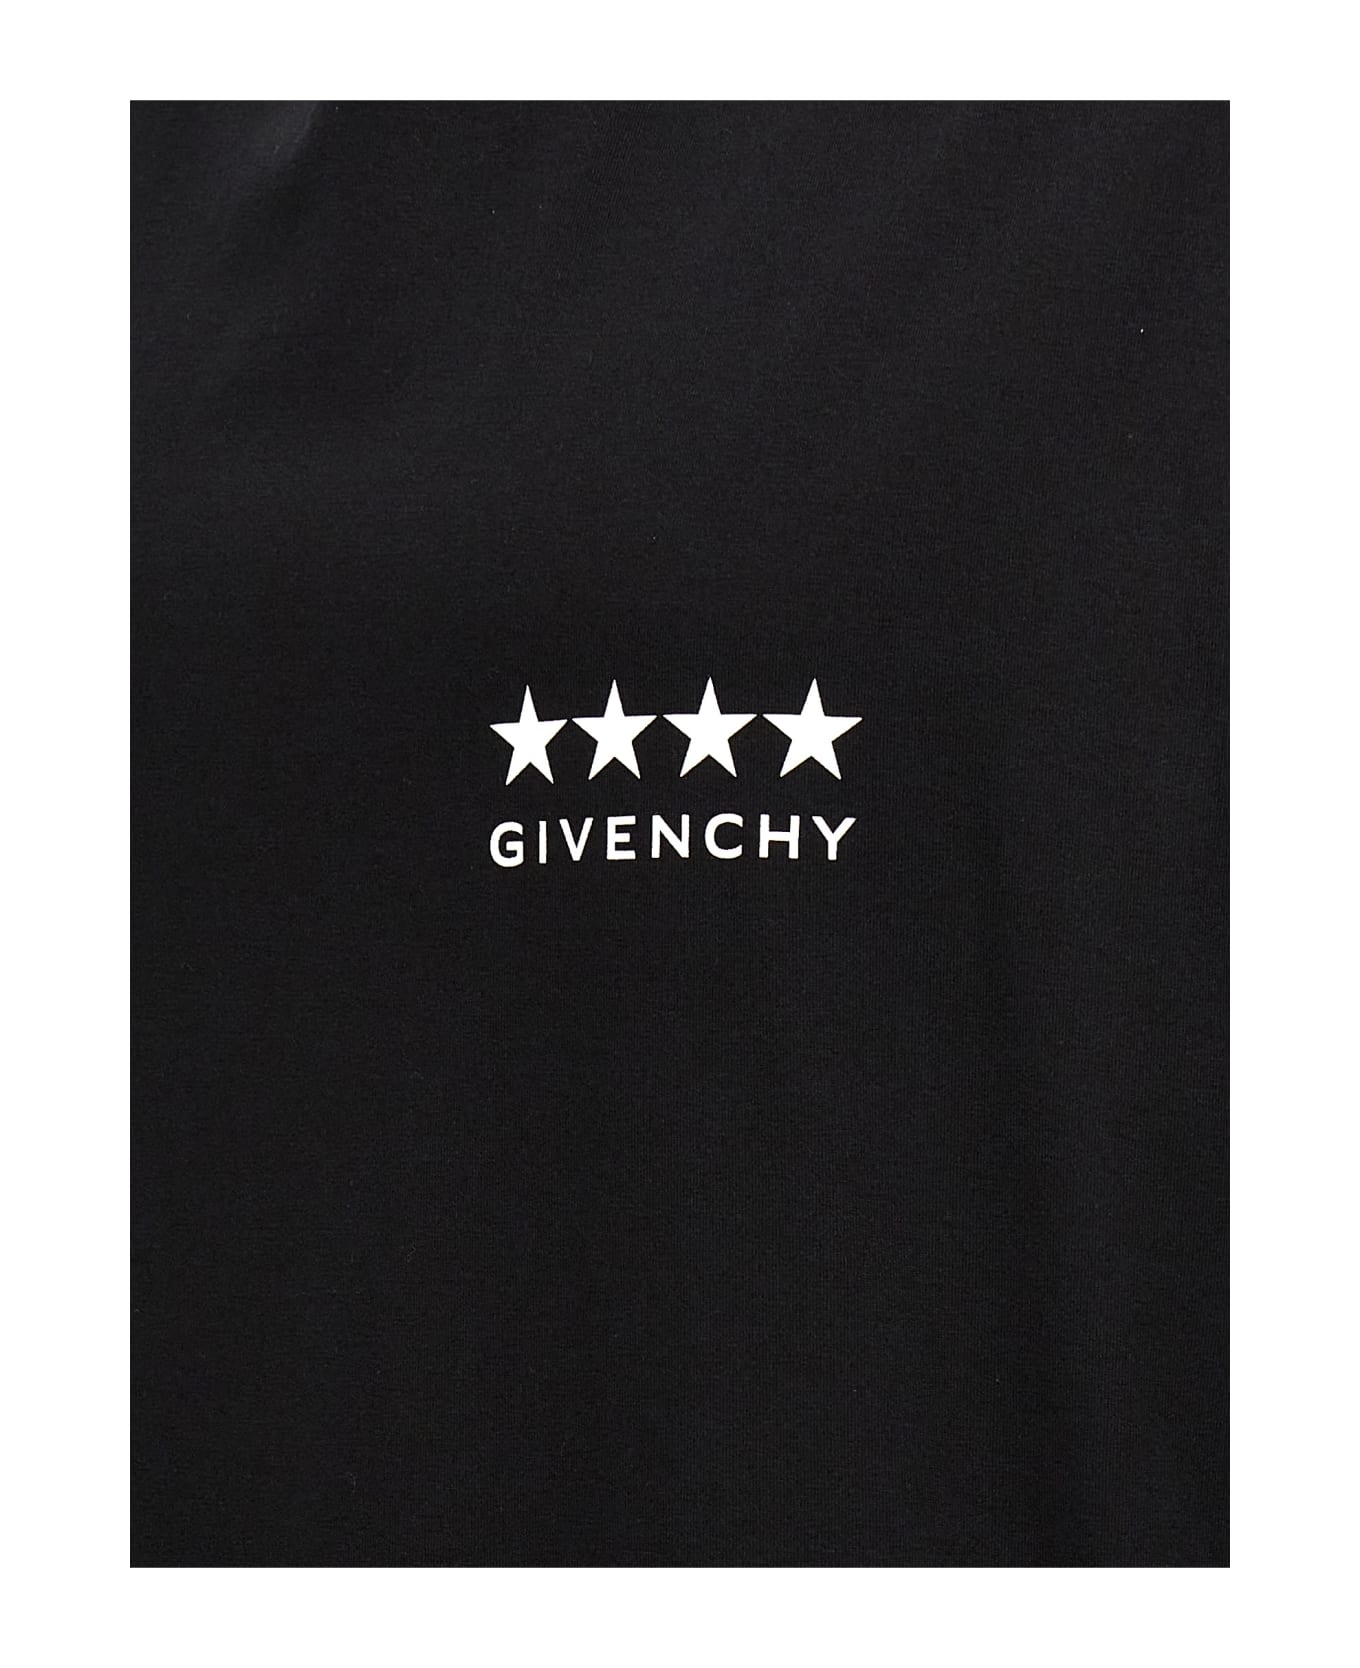 Givenchy Logo Print T-shirt - White/Black